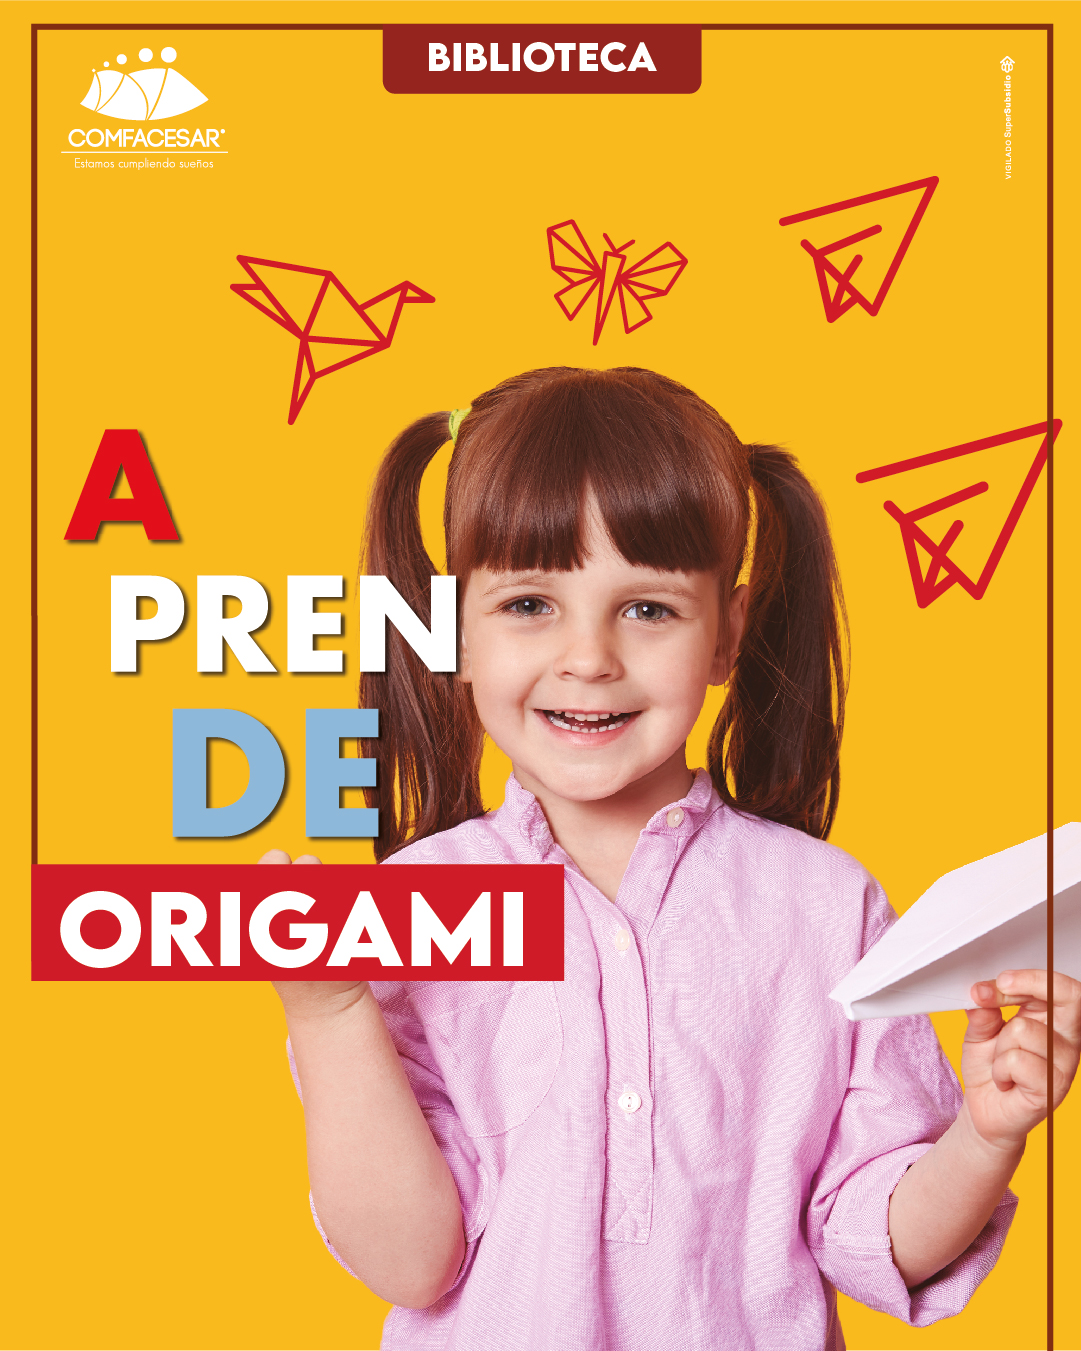 OrigamiOp